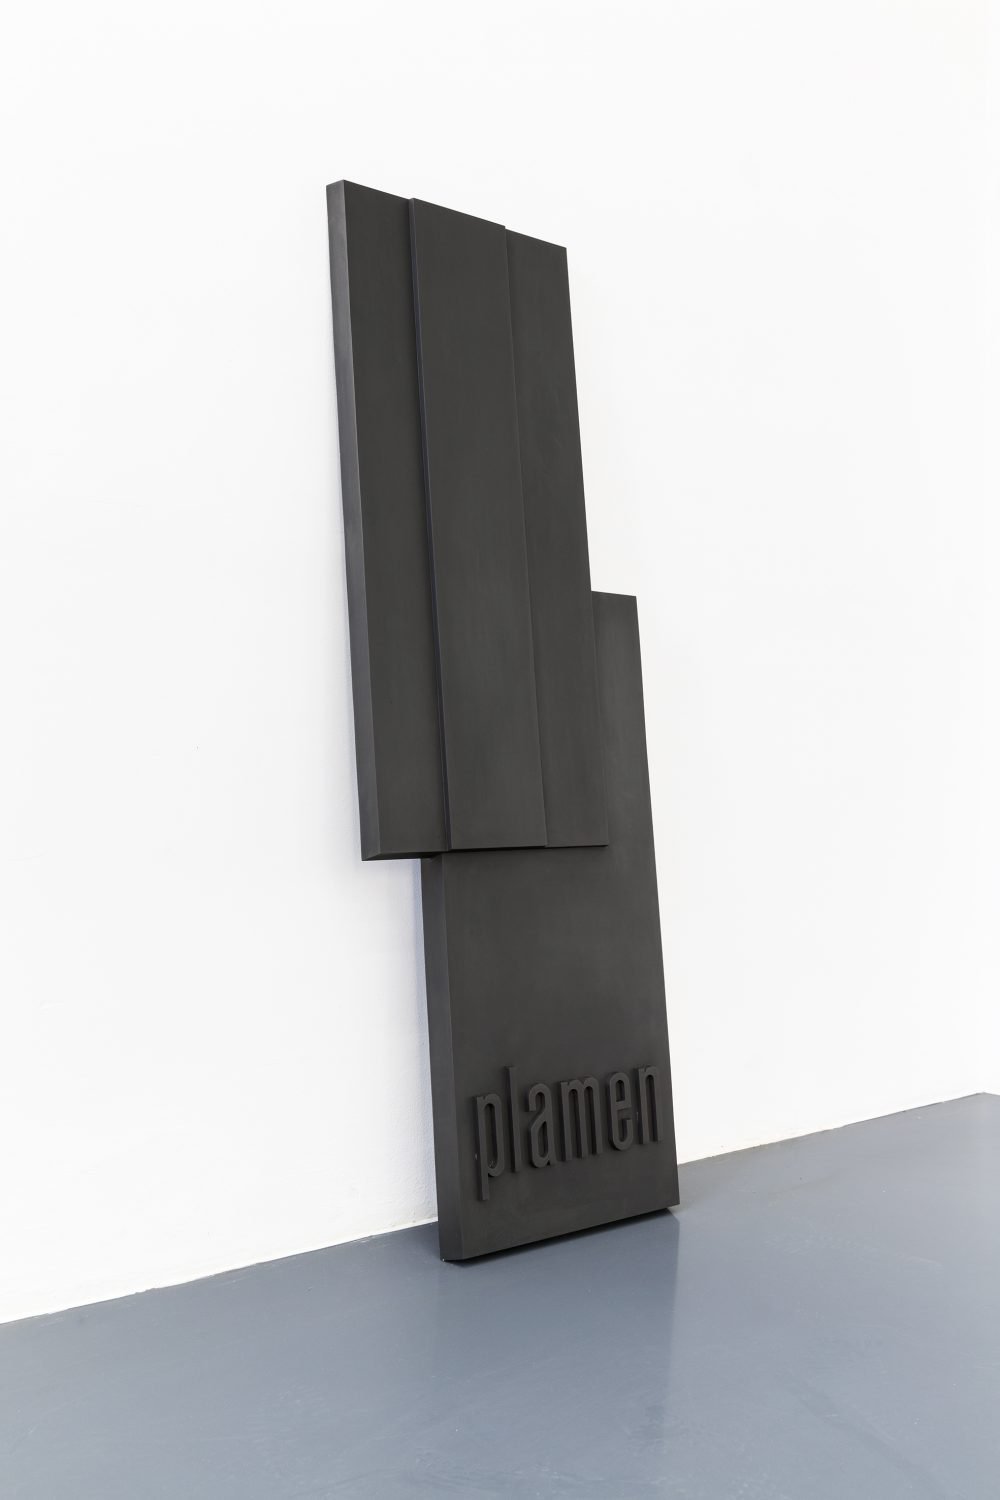 Plamen DejanoffPlamen, 2015Bronze162 x 55 x 7 cm